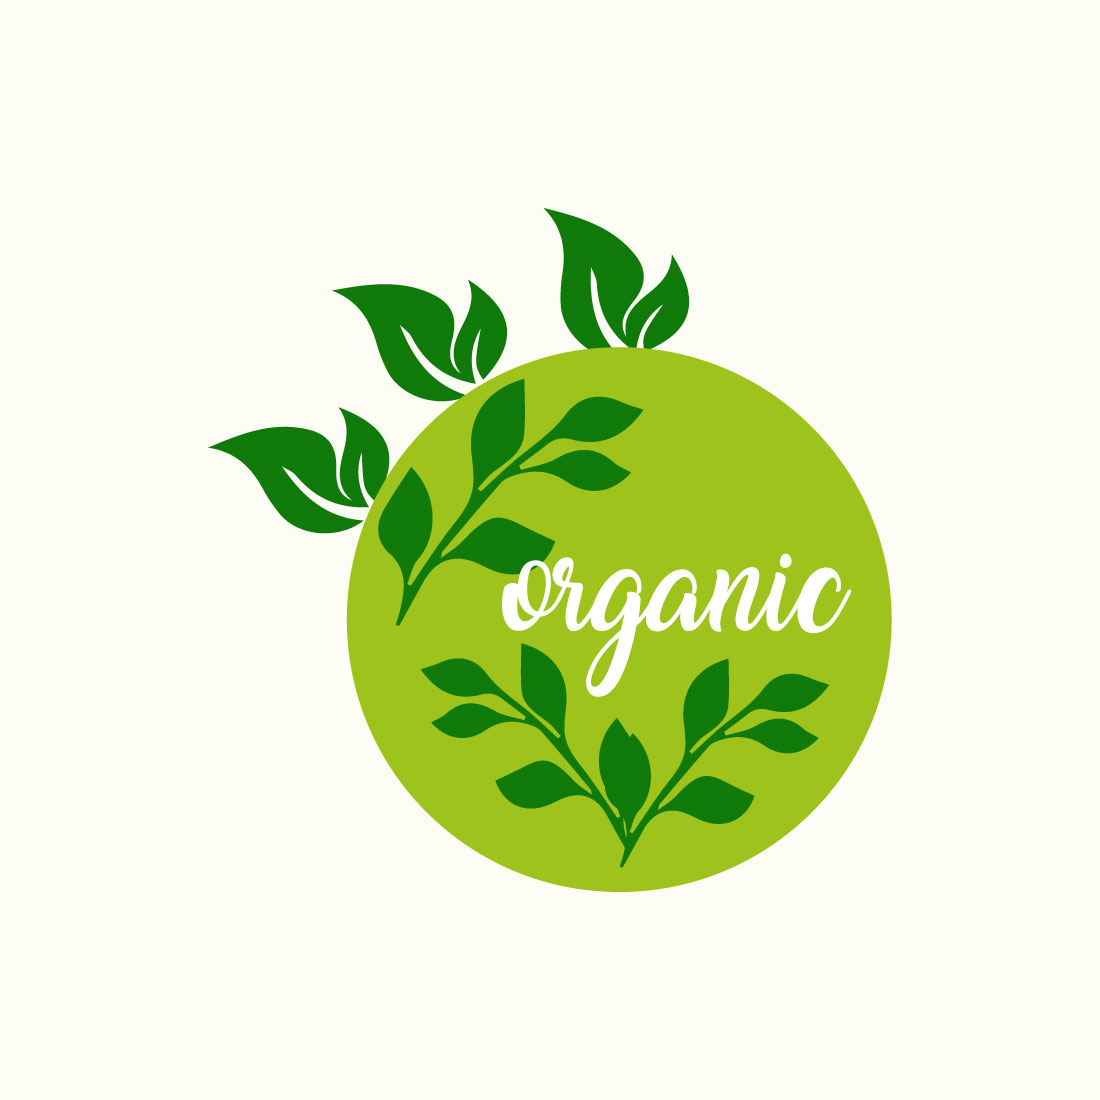 Free organic vegetables logo cover image.